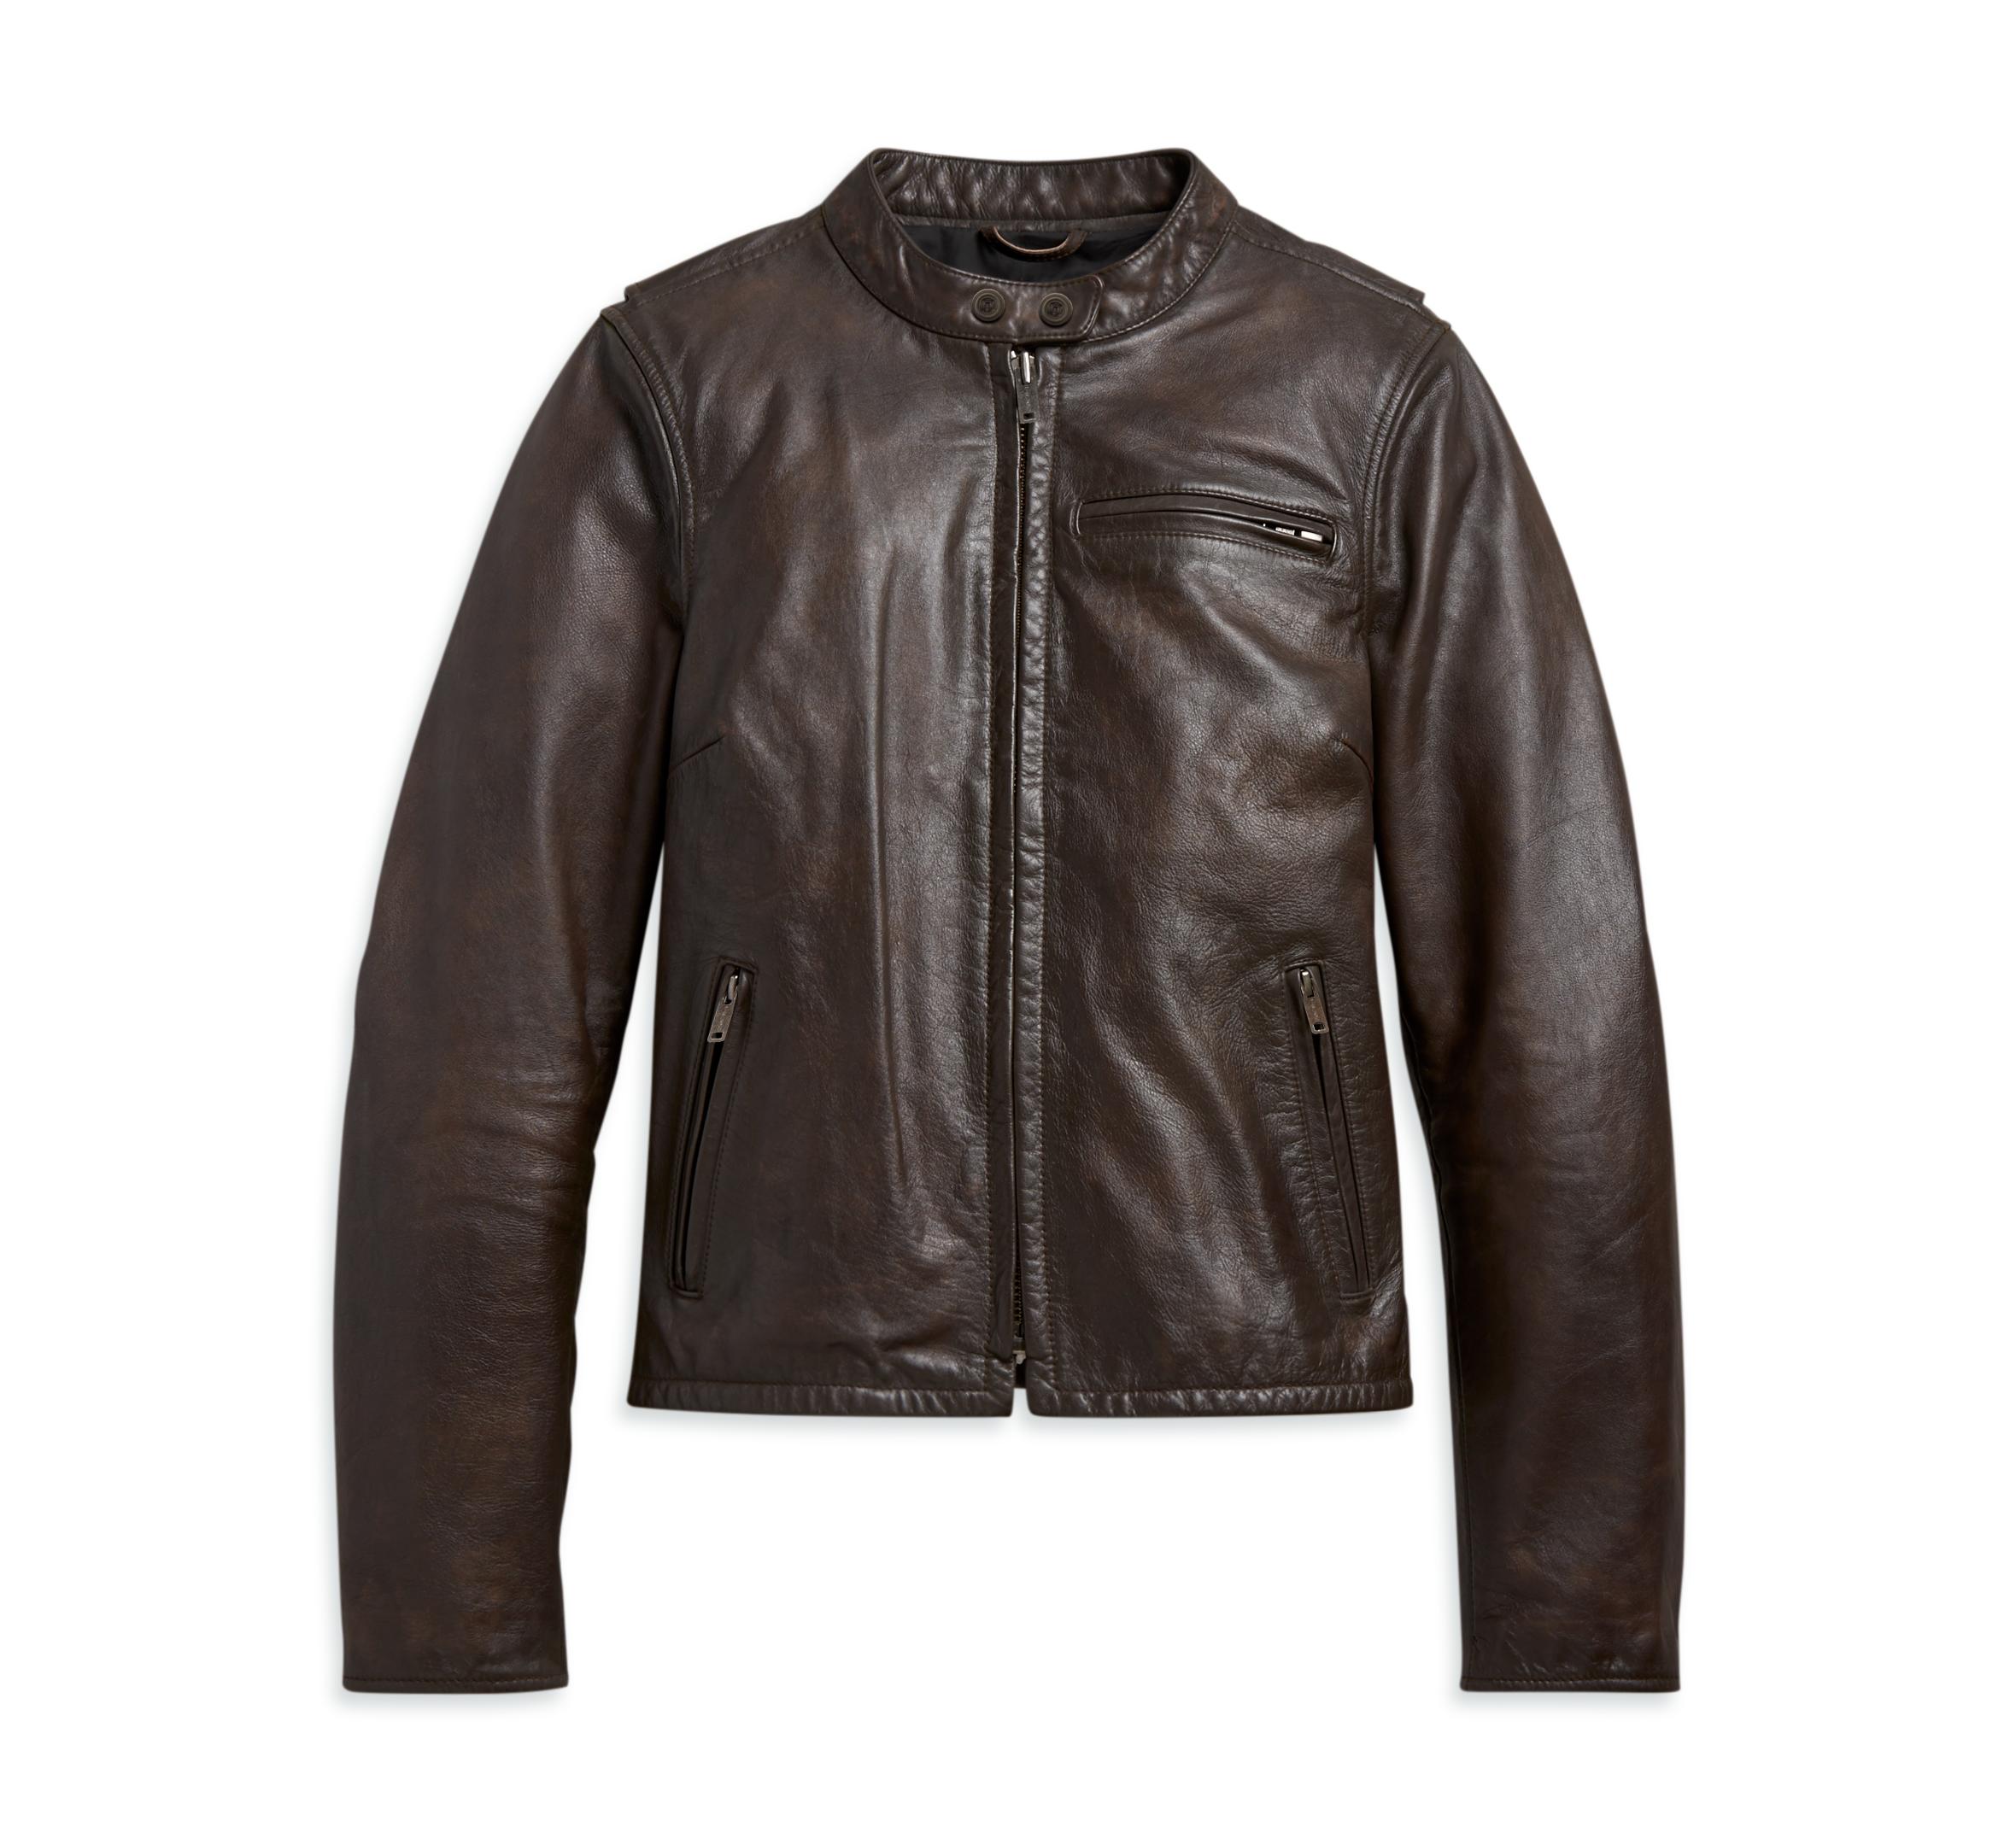 Harley-Davidson Women's Leather Jacket - 97008-21VW